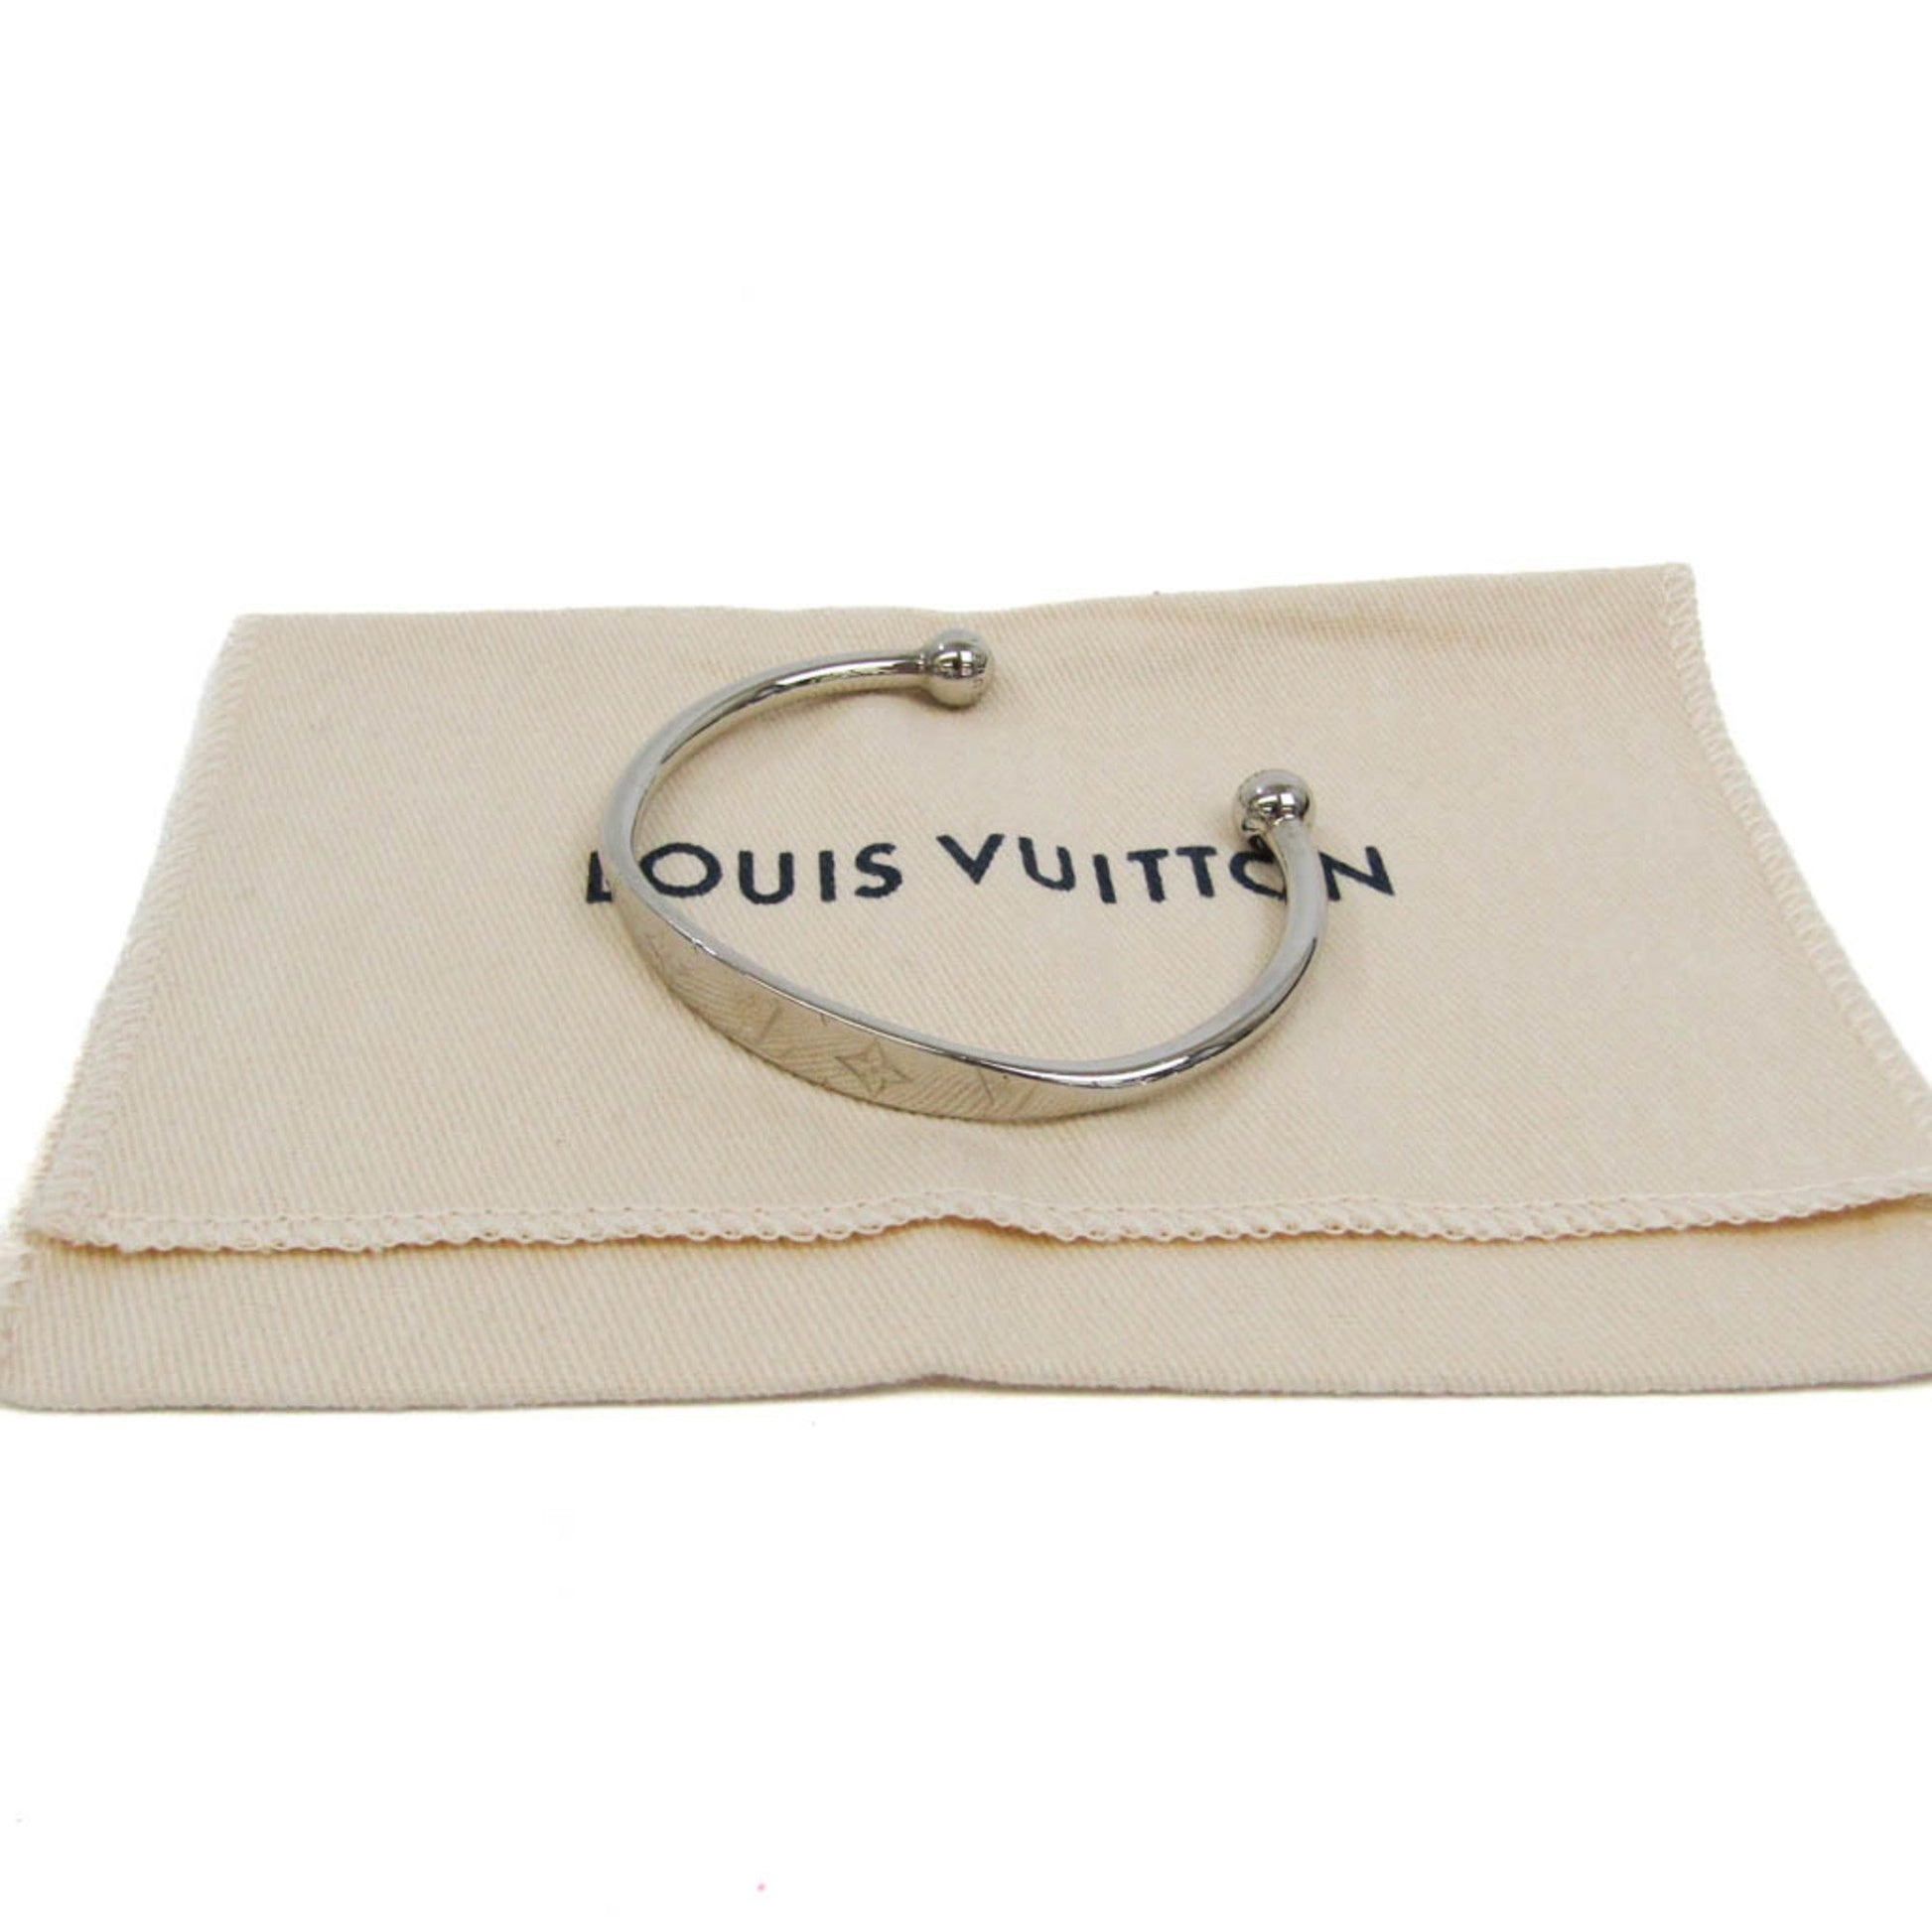 Louis Vuitton Jonc Monogram Bangle Bracelet M64839 924985